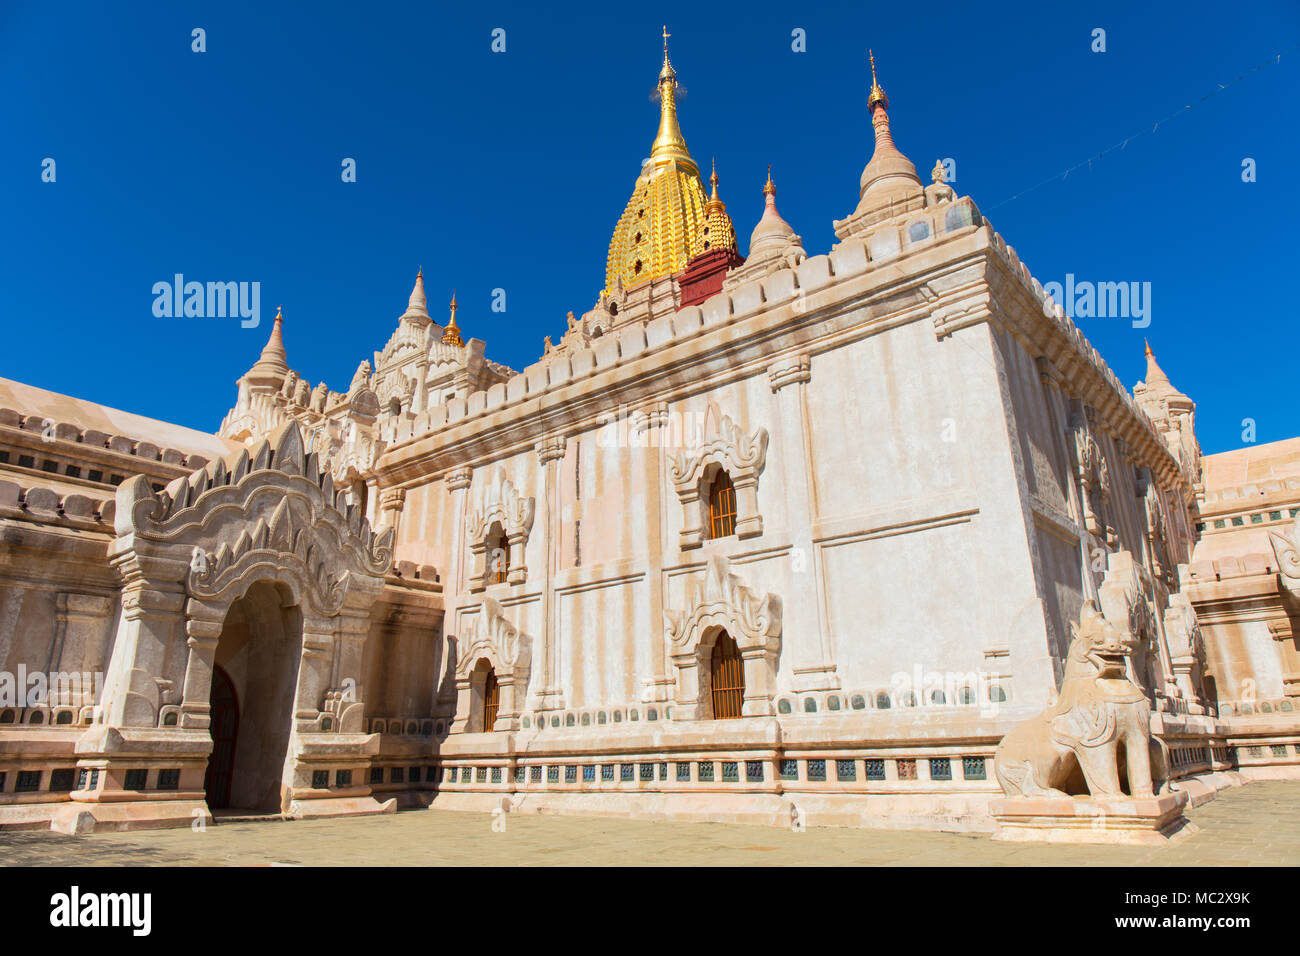 The exterior of the 'Ananda Temple' in Bagan, Myanmar (Burma). Stock Photo